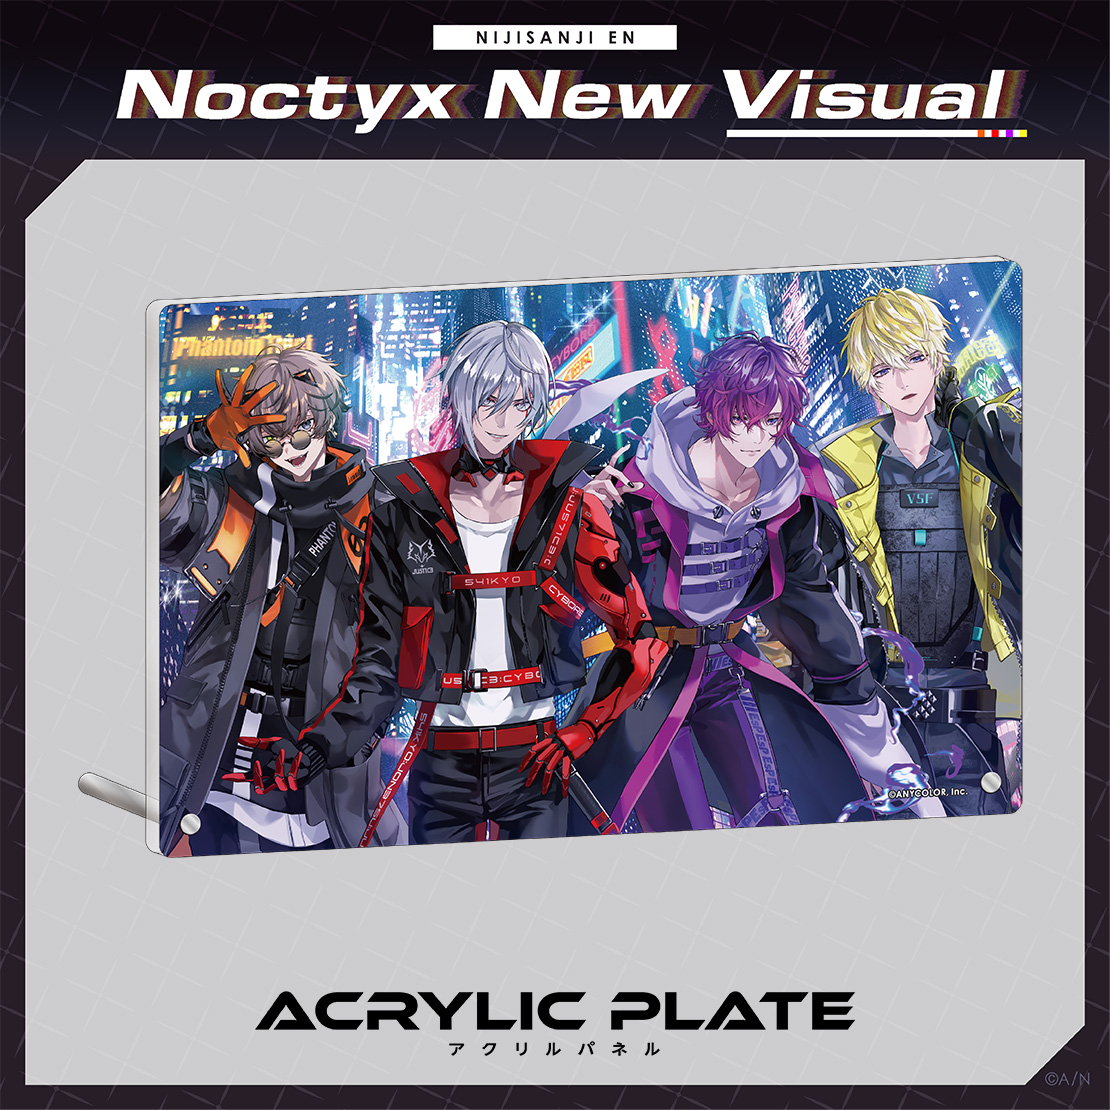 [In-stock] Nijisanji Noctyx New Visual Goods